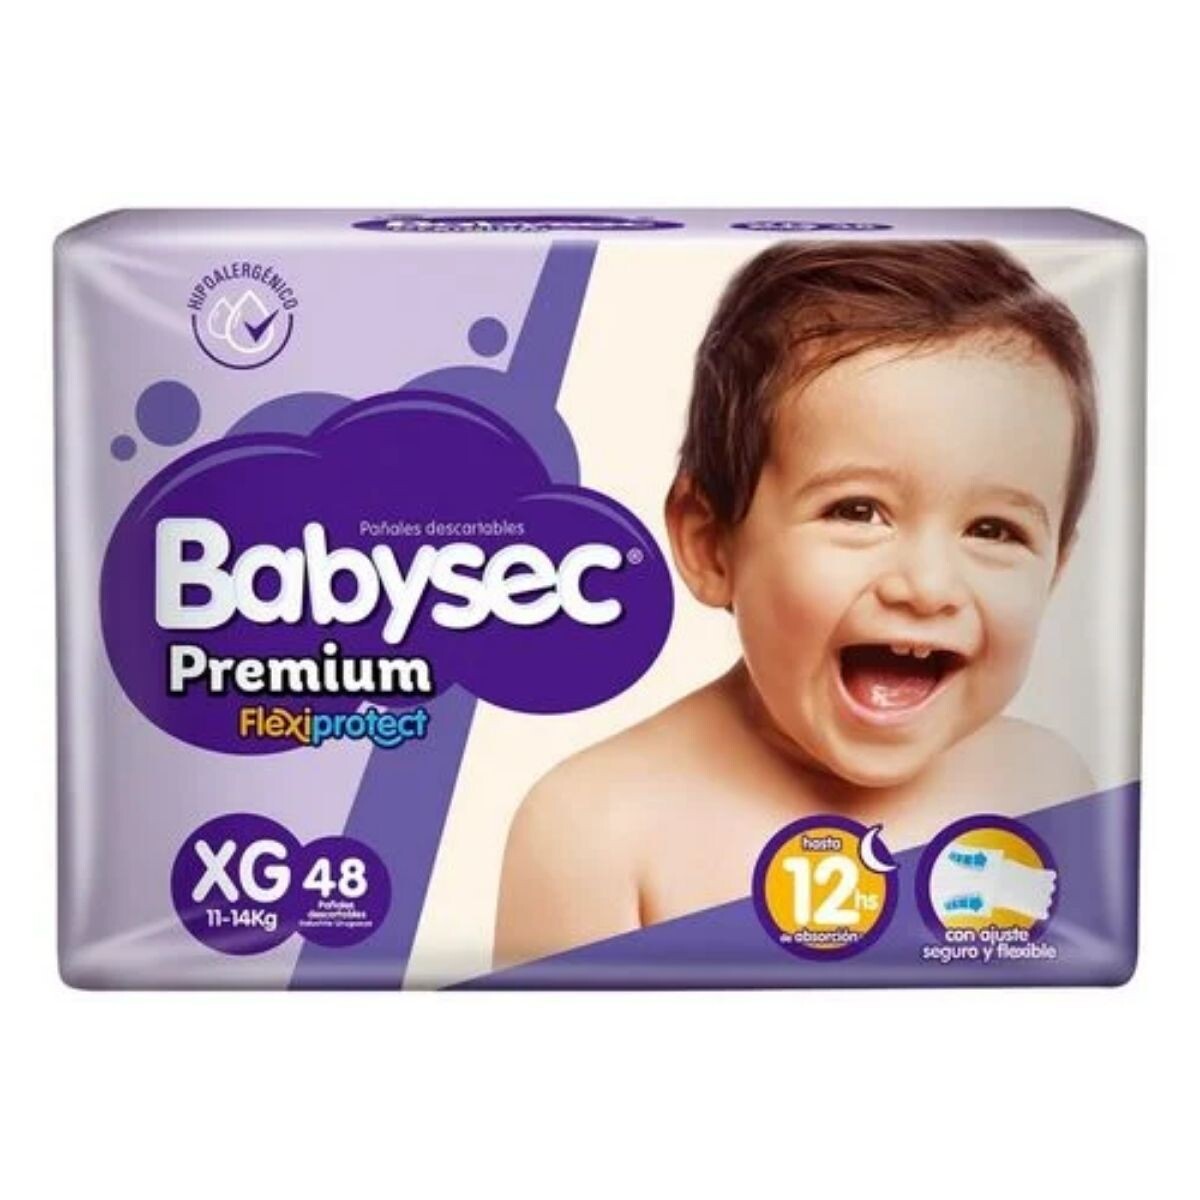 Pañales Babysec Premium Flexiprotect XG - X48 